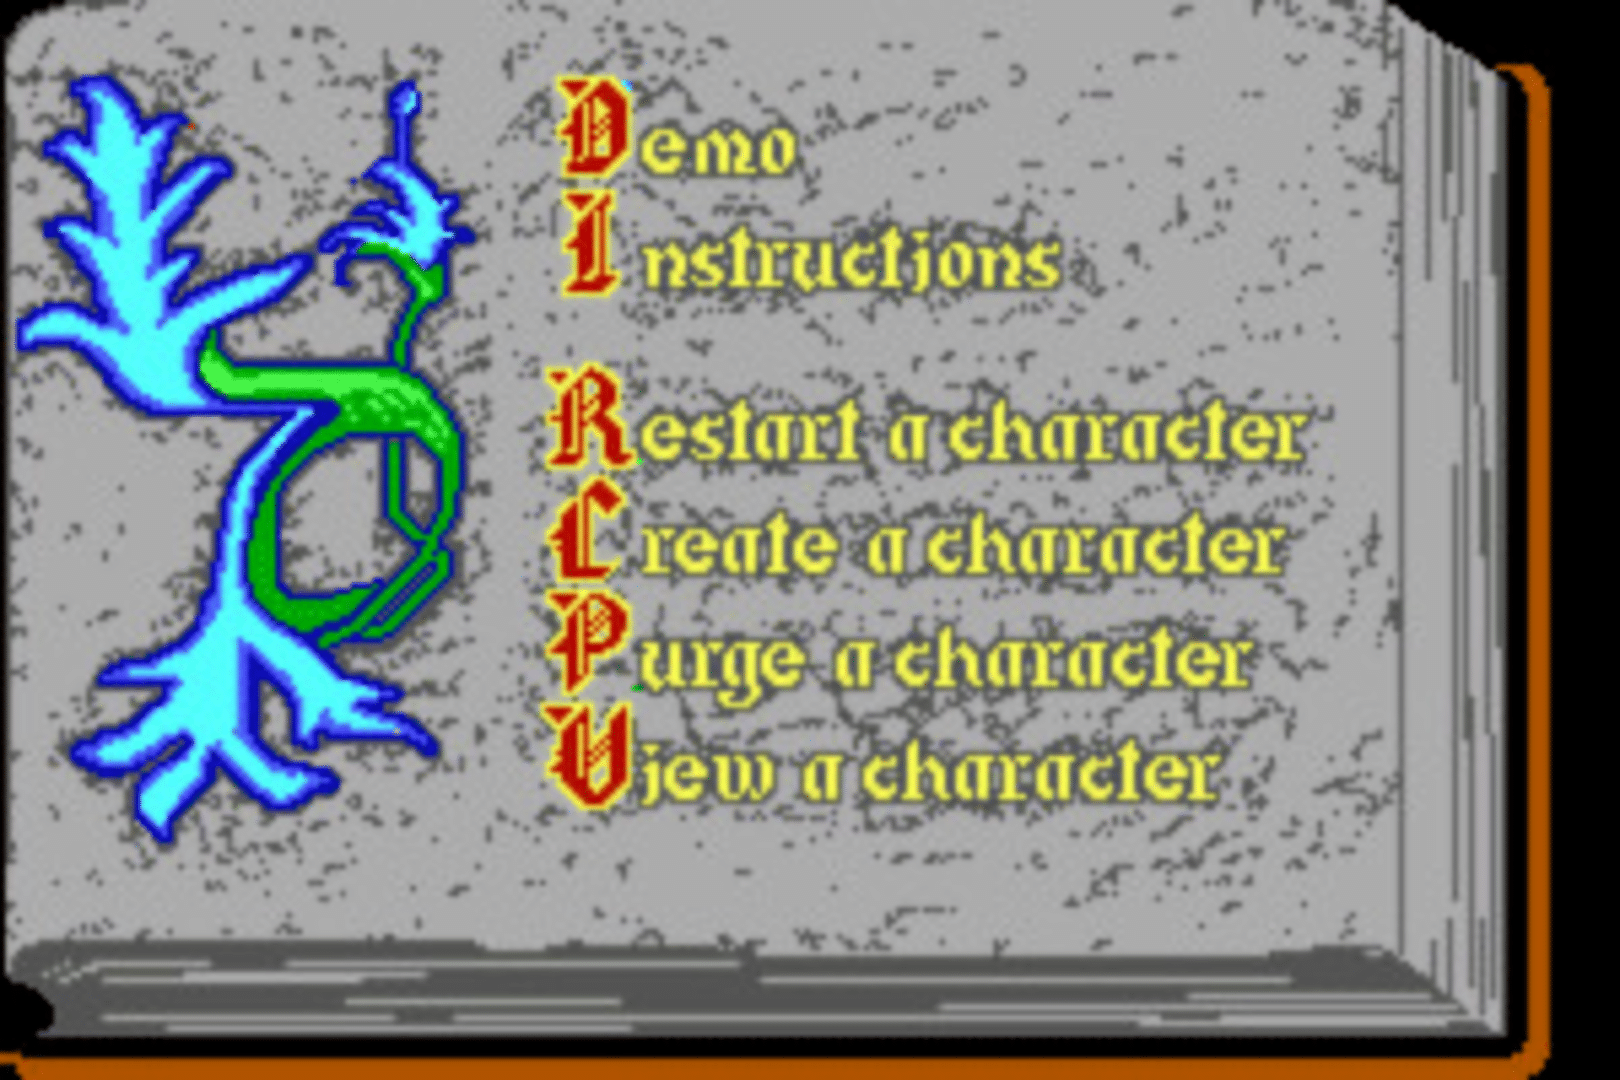 Questron II screenshot